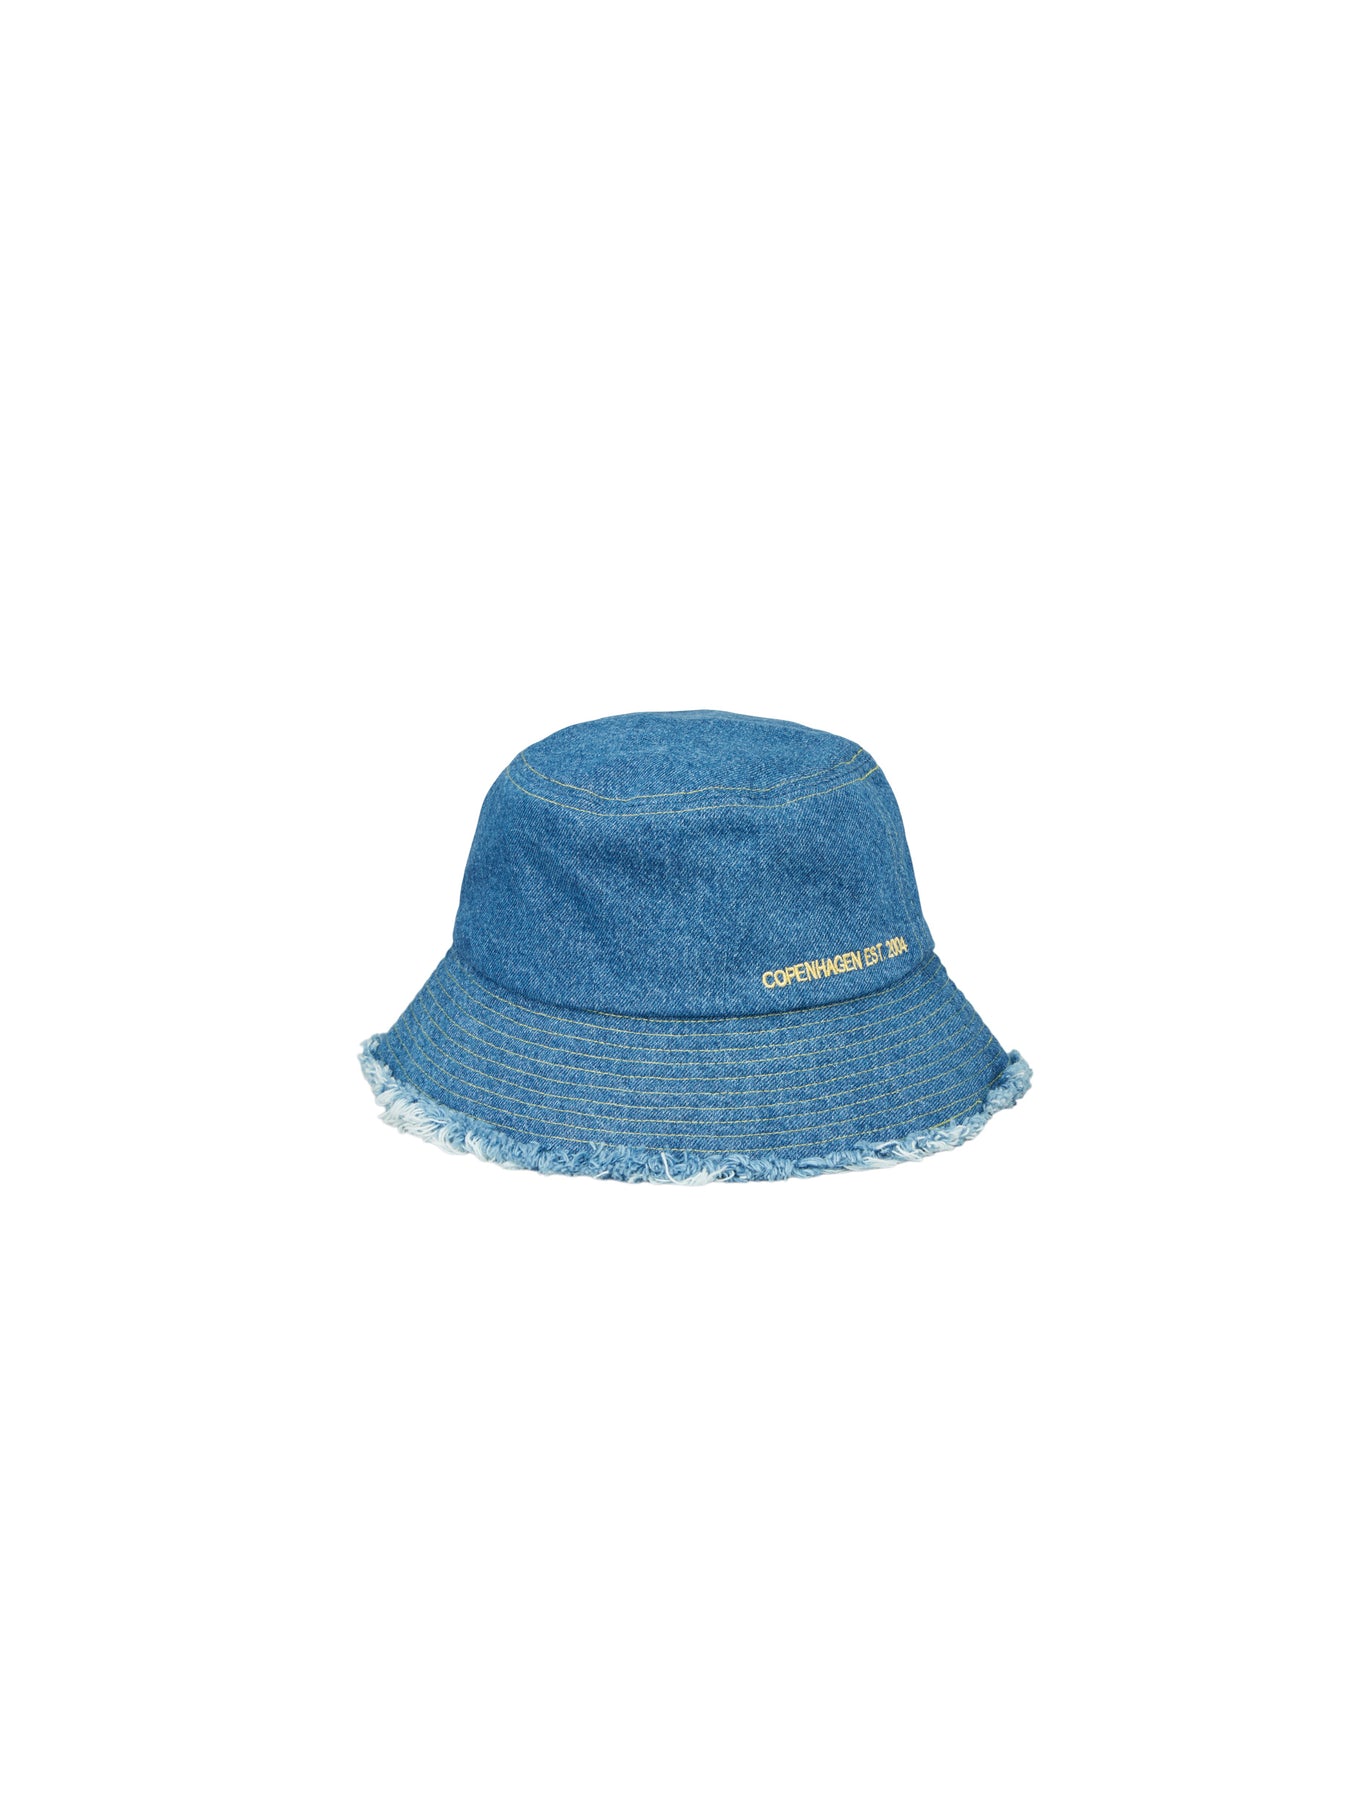 Denima Bucket Hat - Coronet Blue